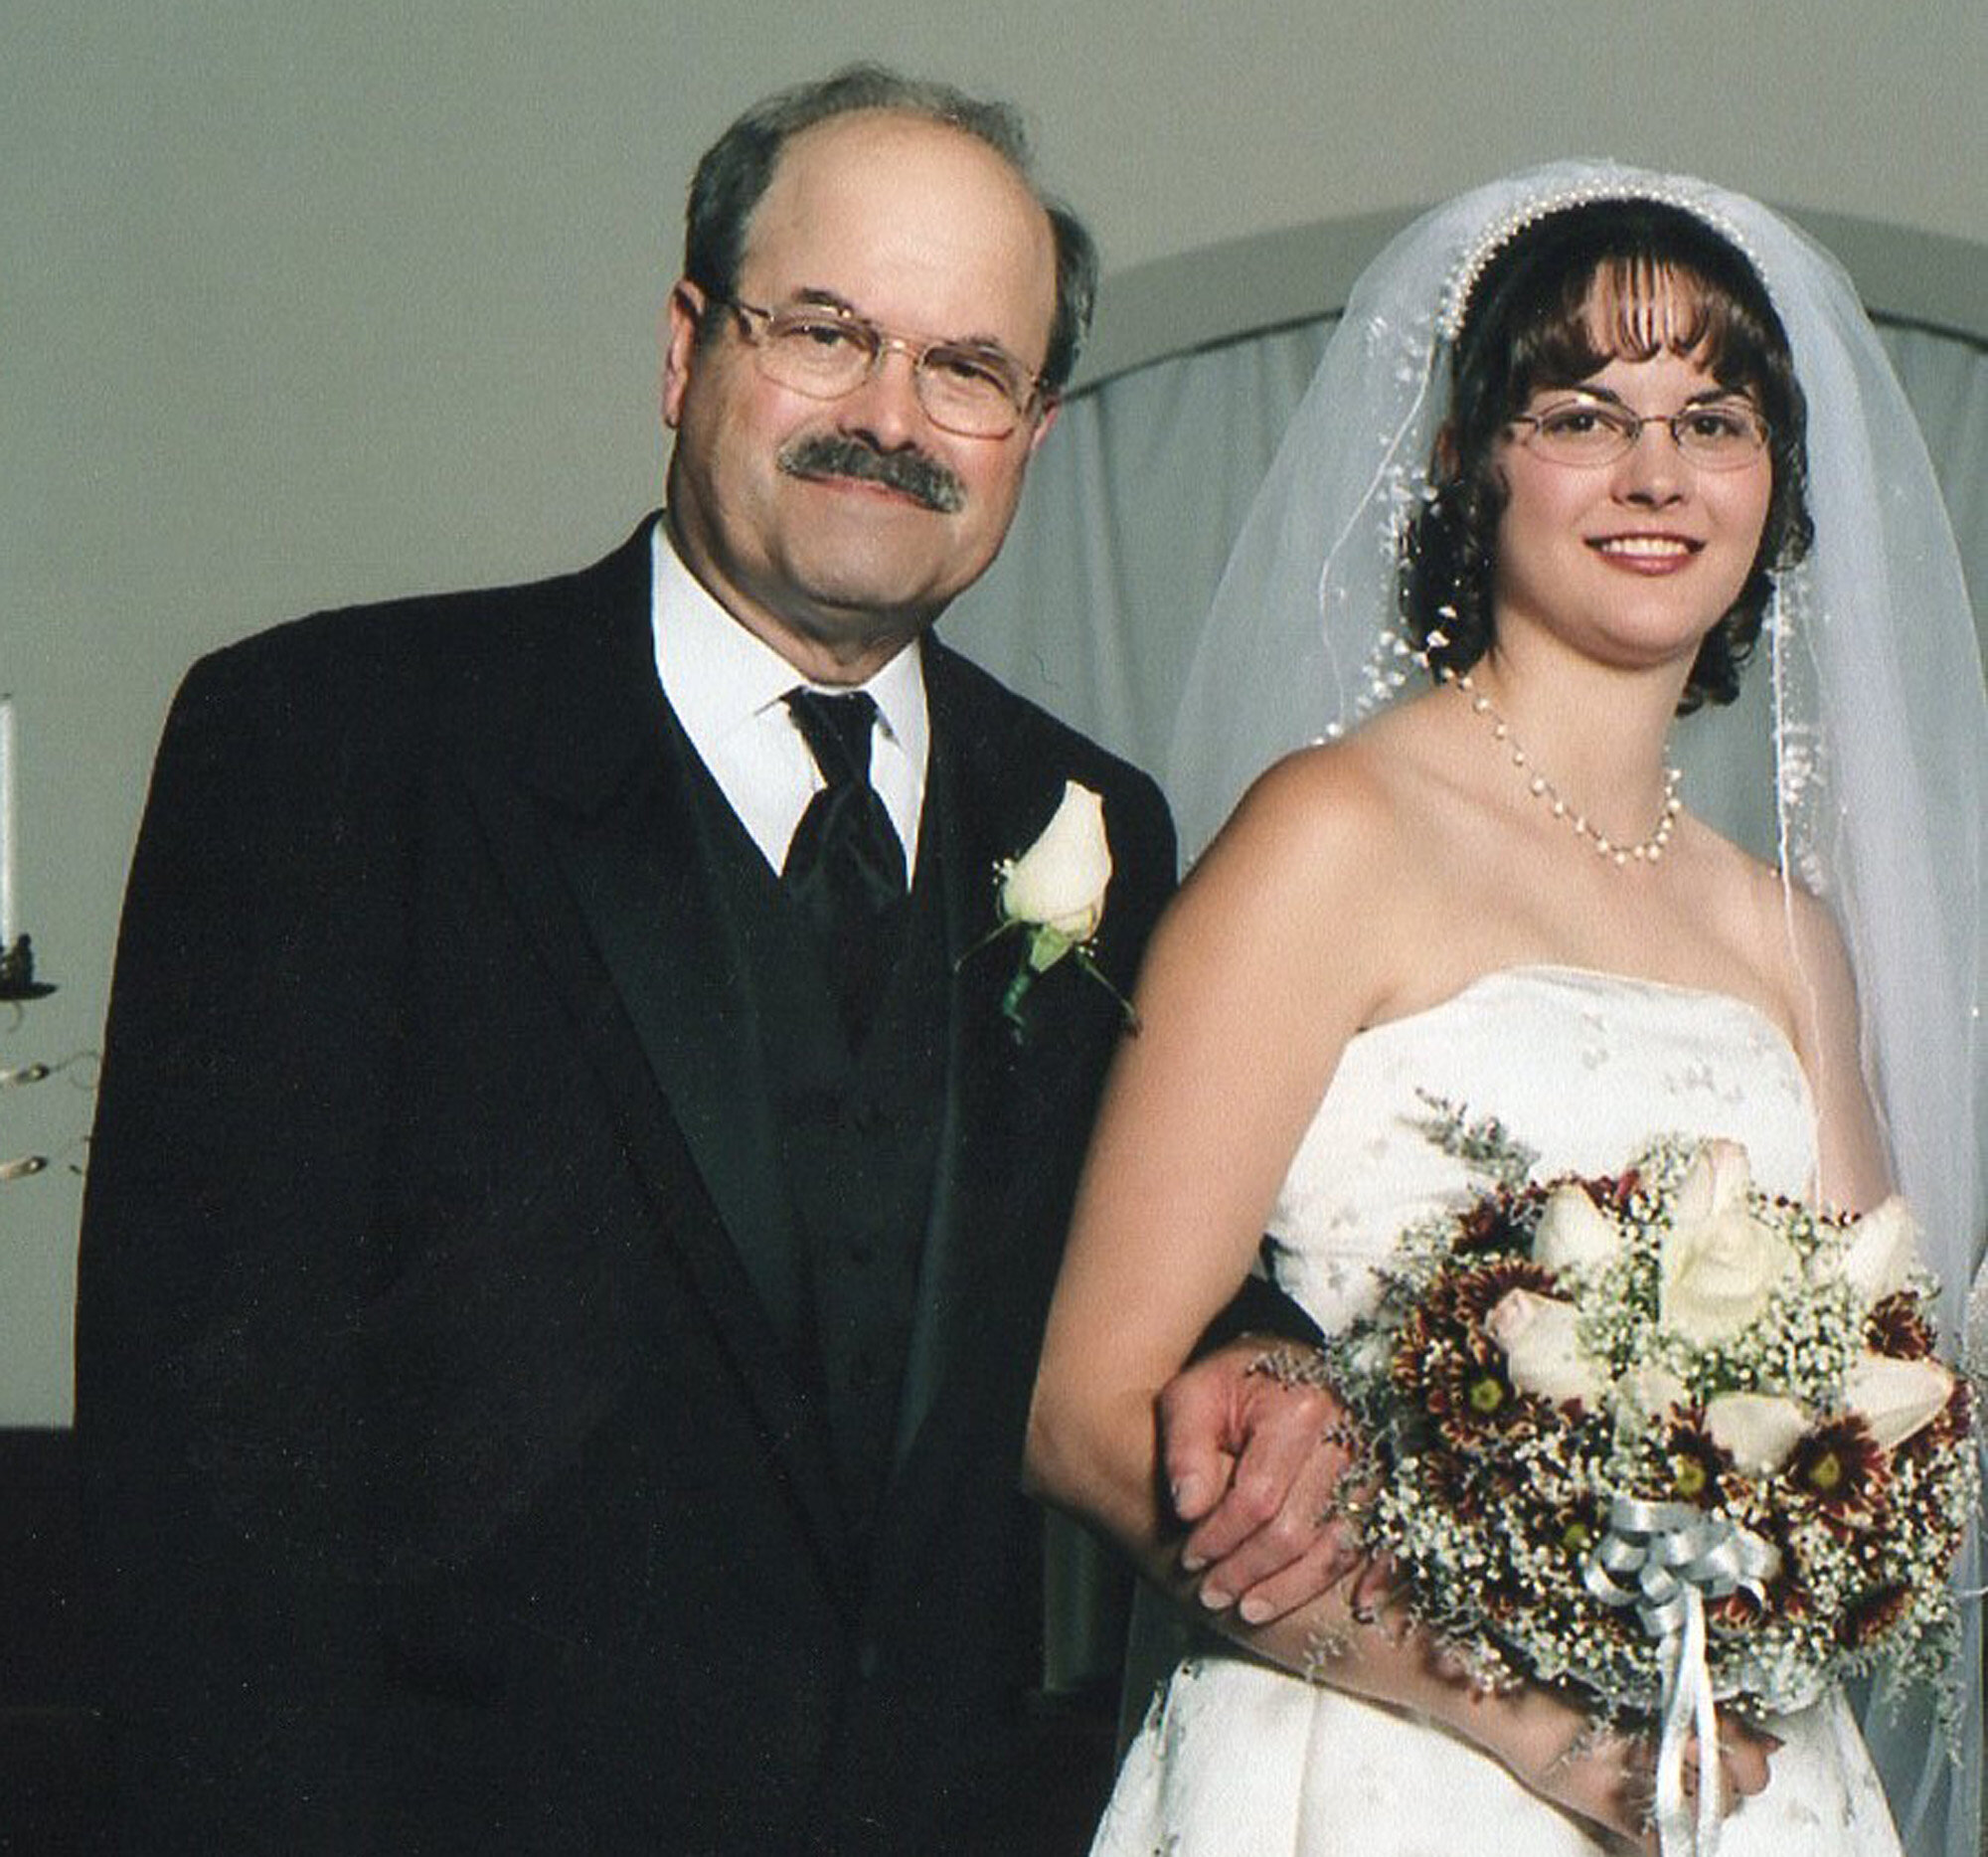 Dennis Rader and daughter's wedding